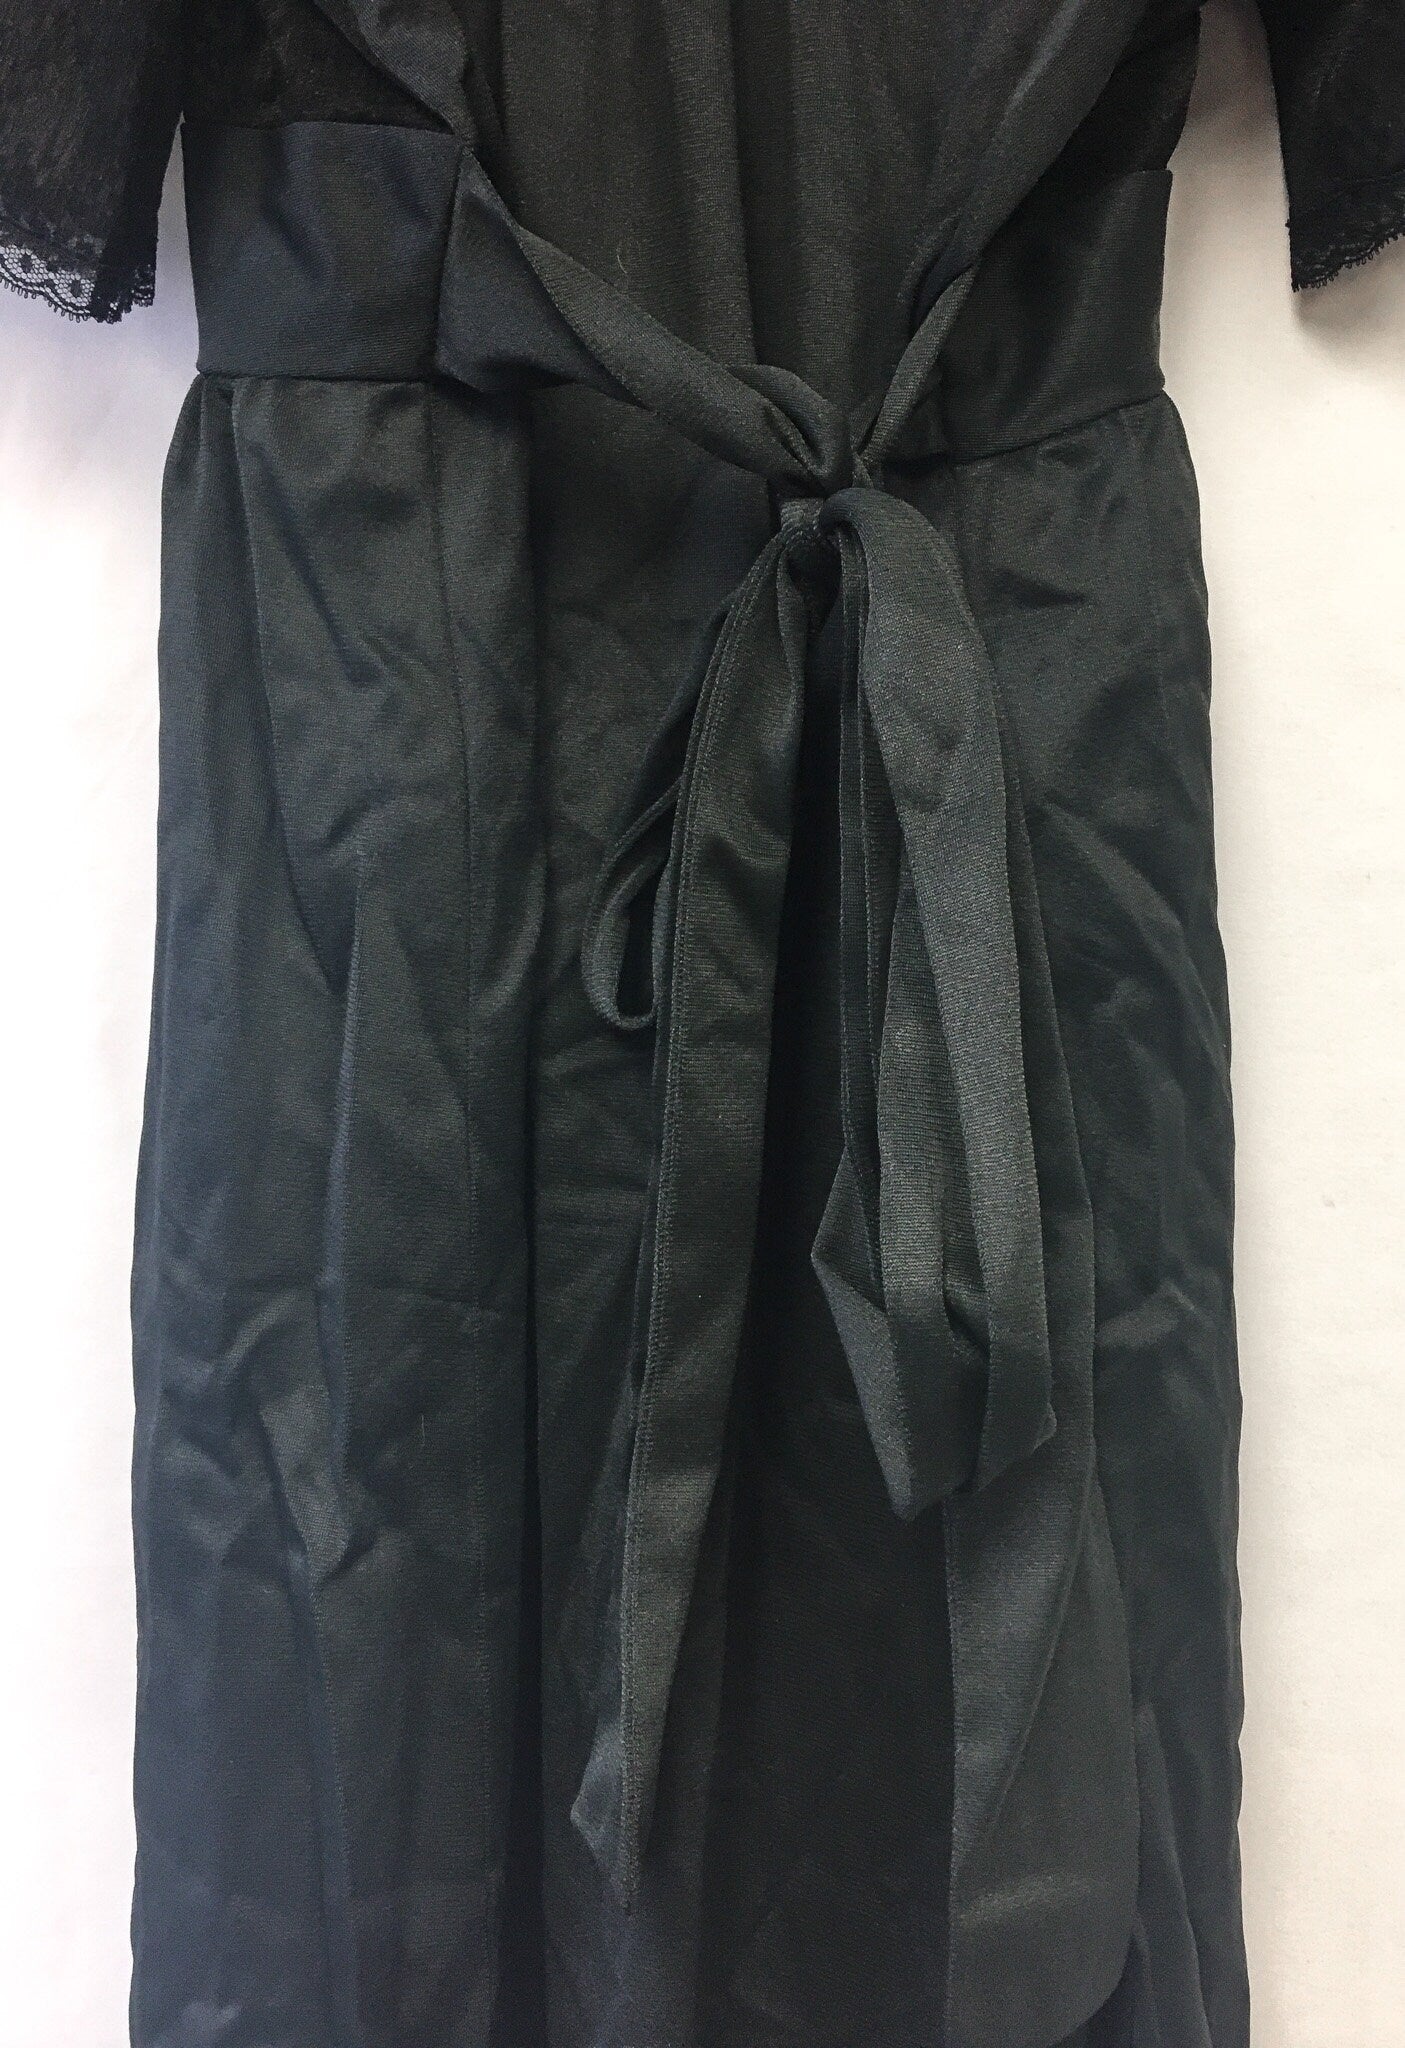 Vintage Gossard Artemis Black Short-Sleeved Lace Slip Dress with Adjustable Tie, Sz. M, Vintage Peignoir Dress